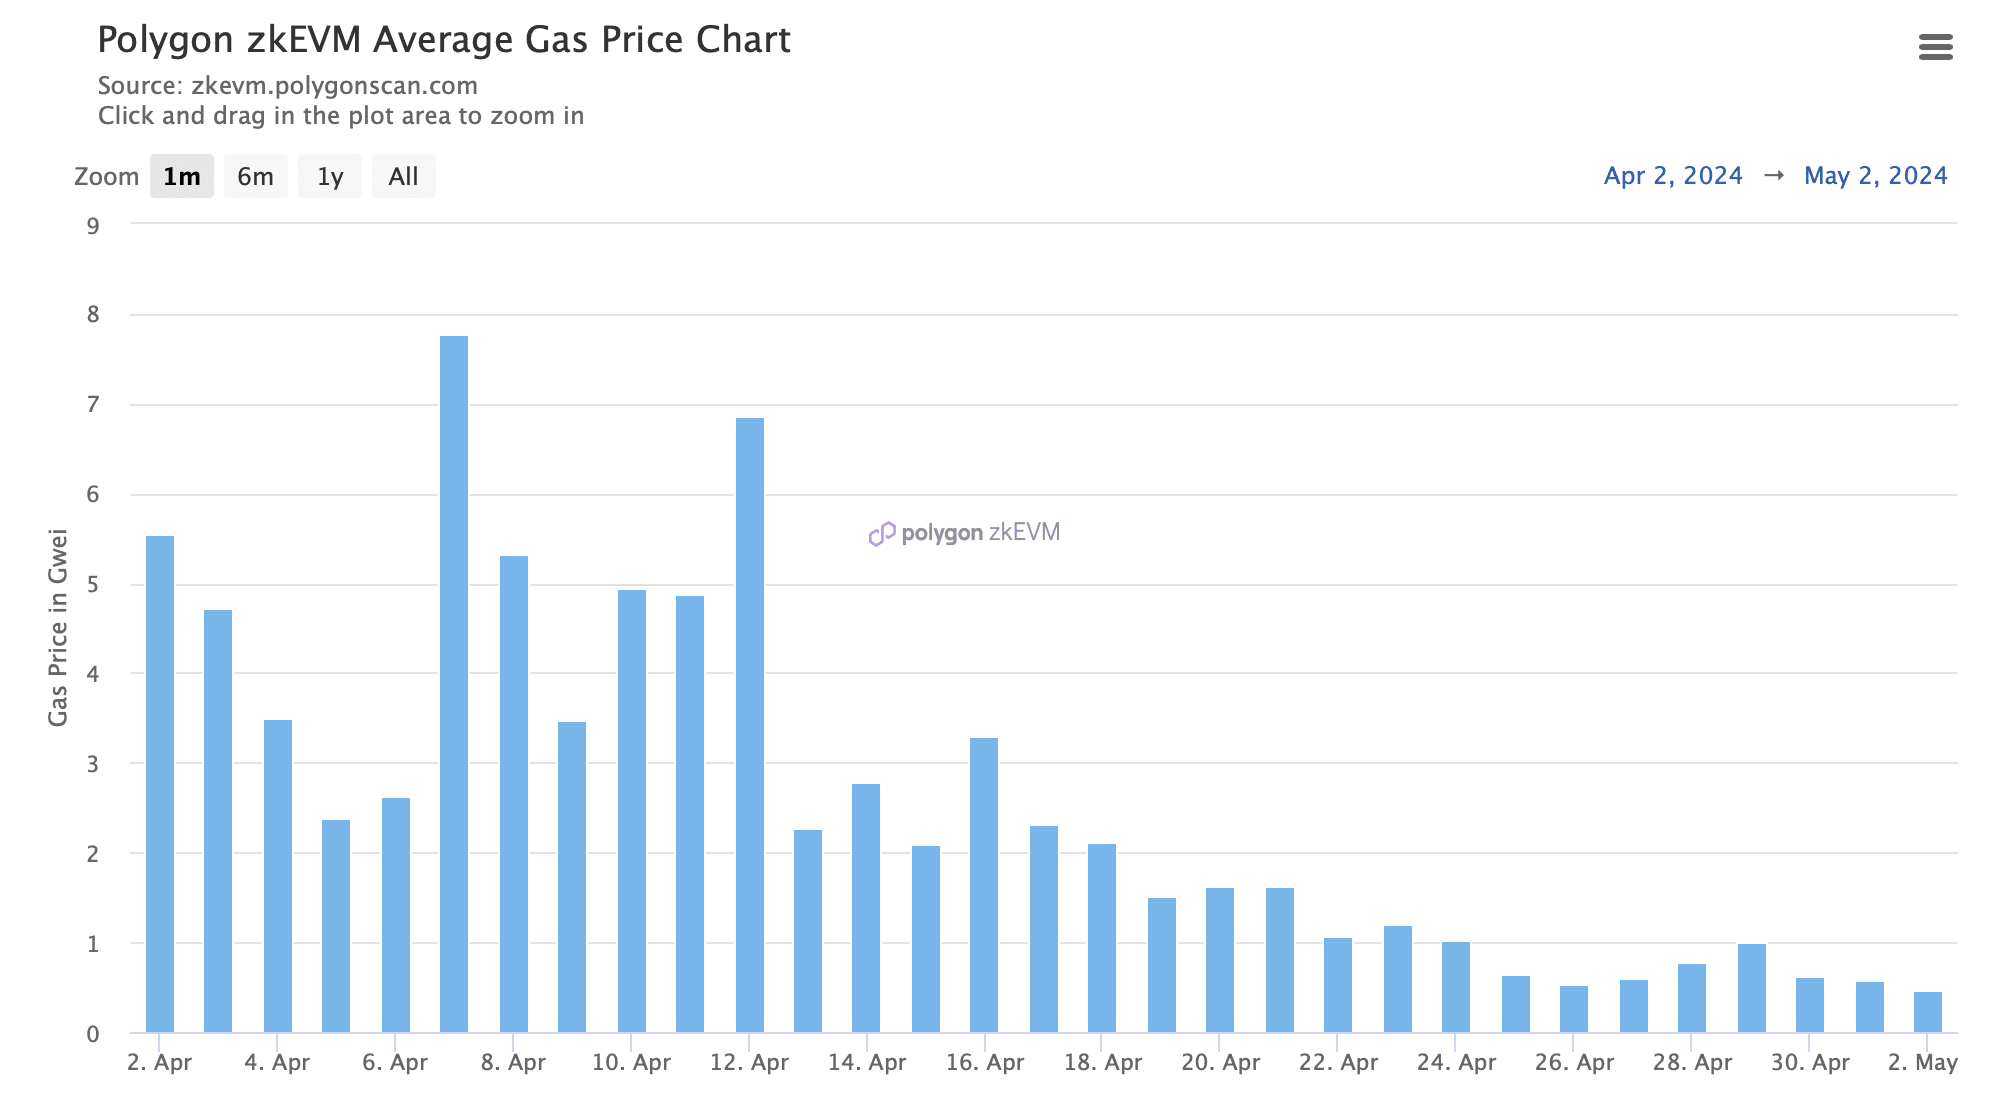 zkEVM's gas price dropped